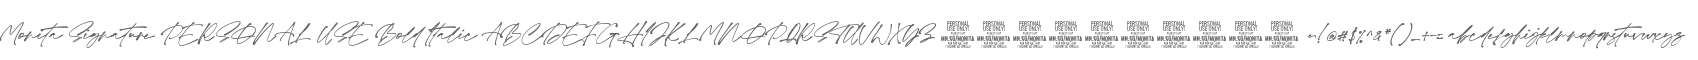 Monita Signature PERSONAL USE Bold Italic